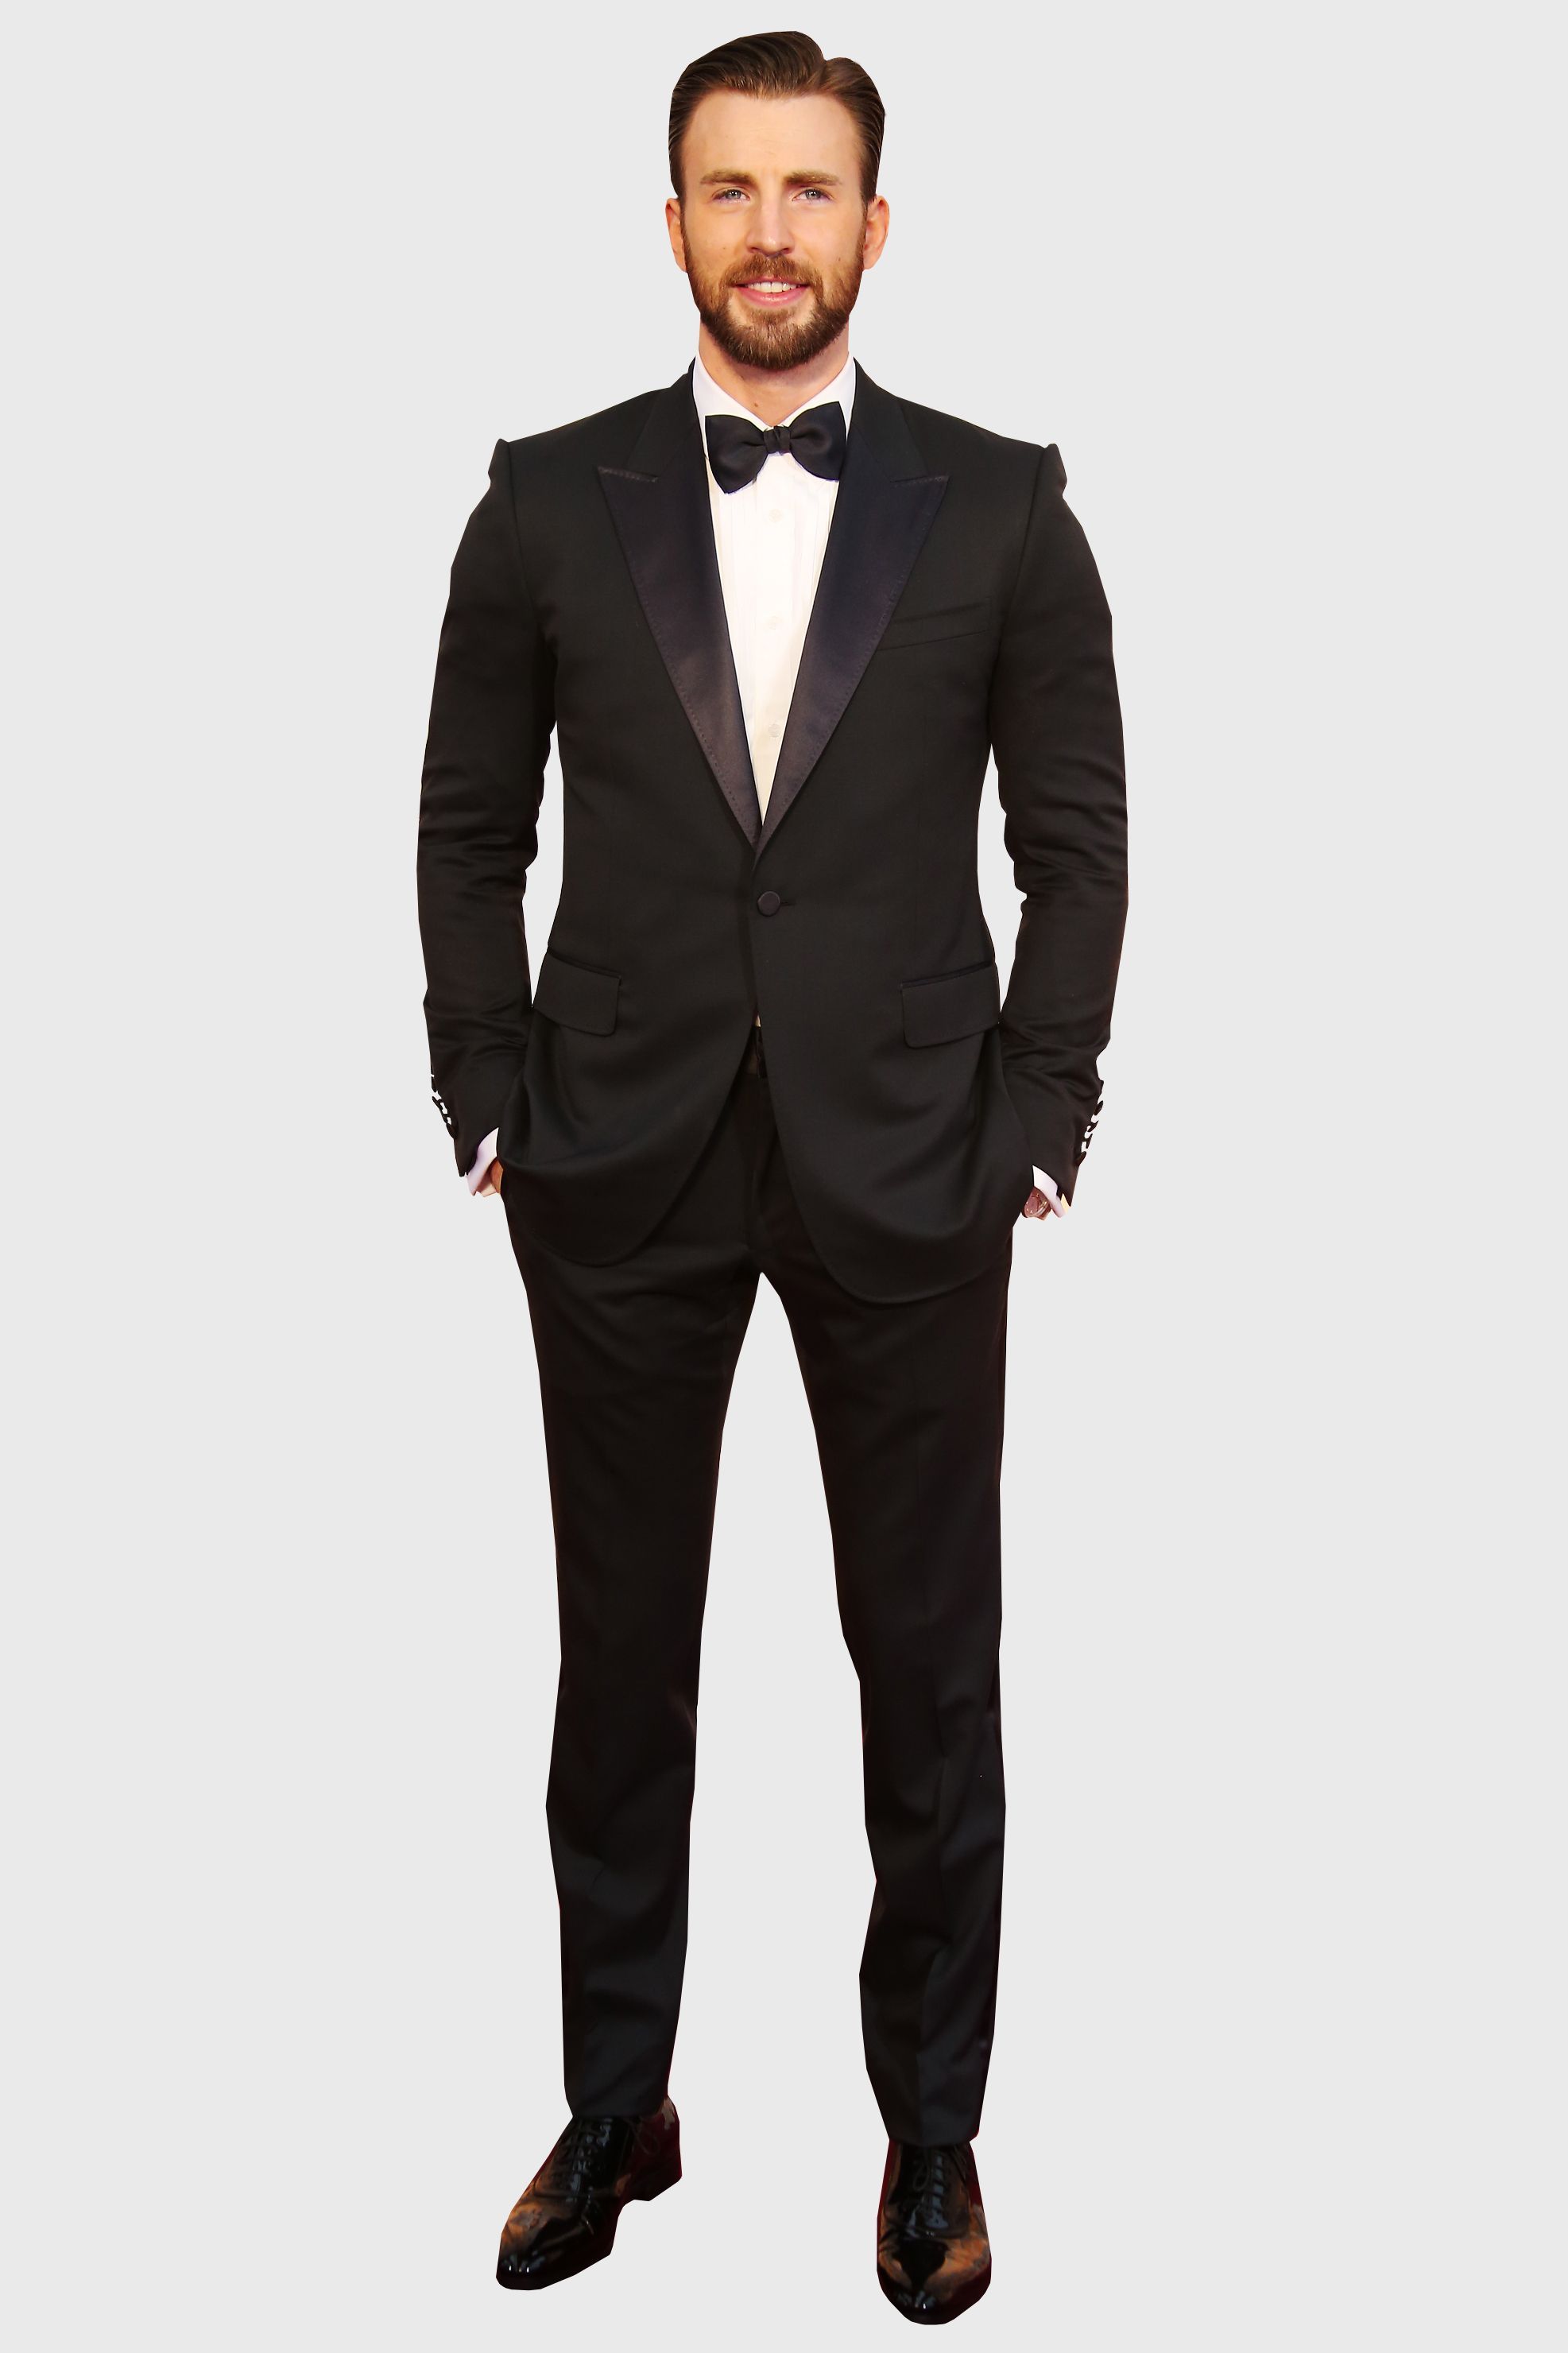 formal attire for wedding male